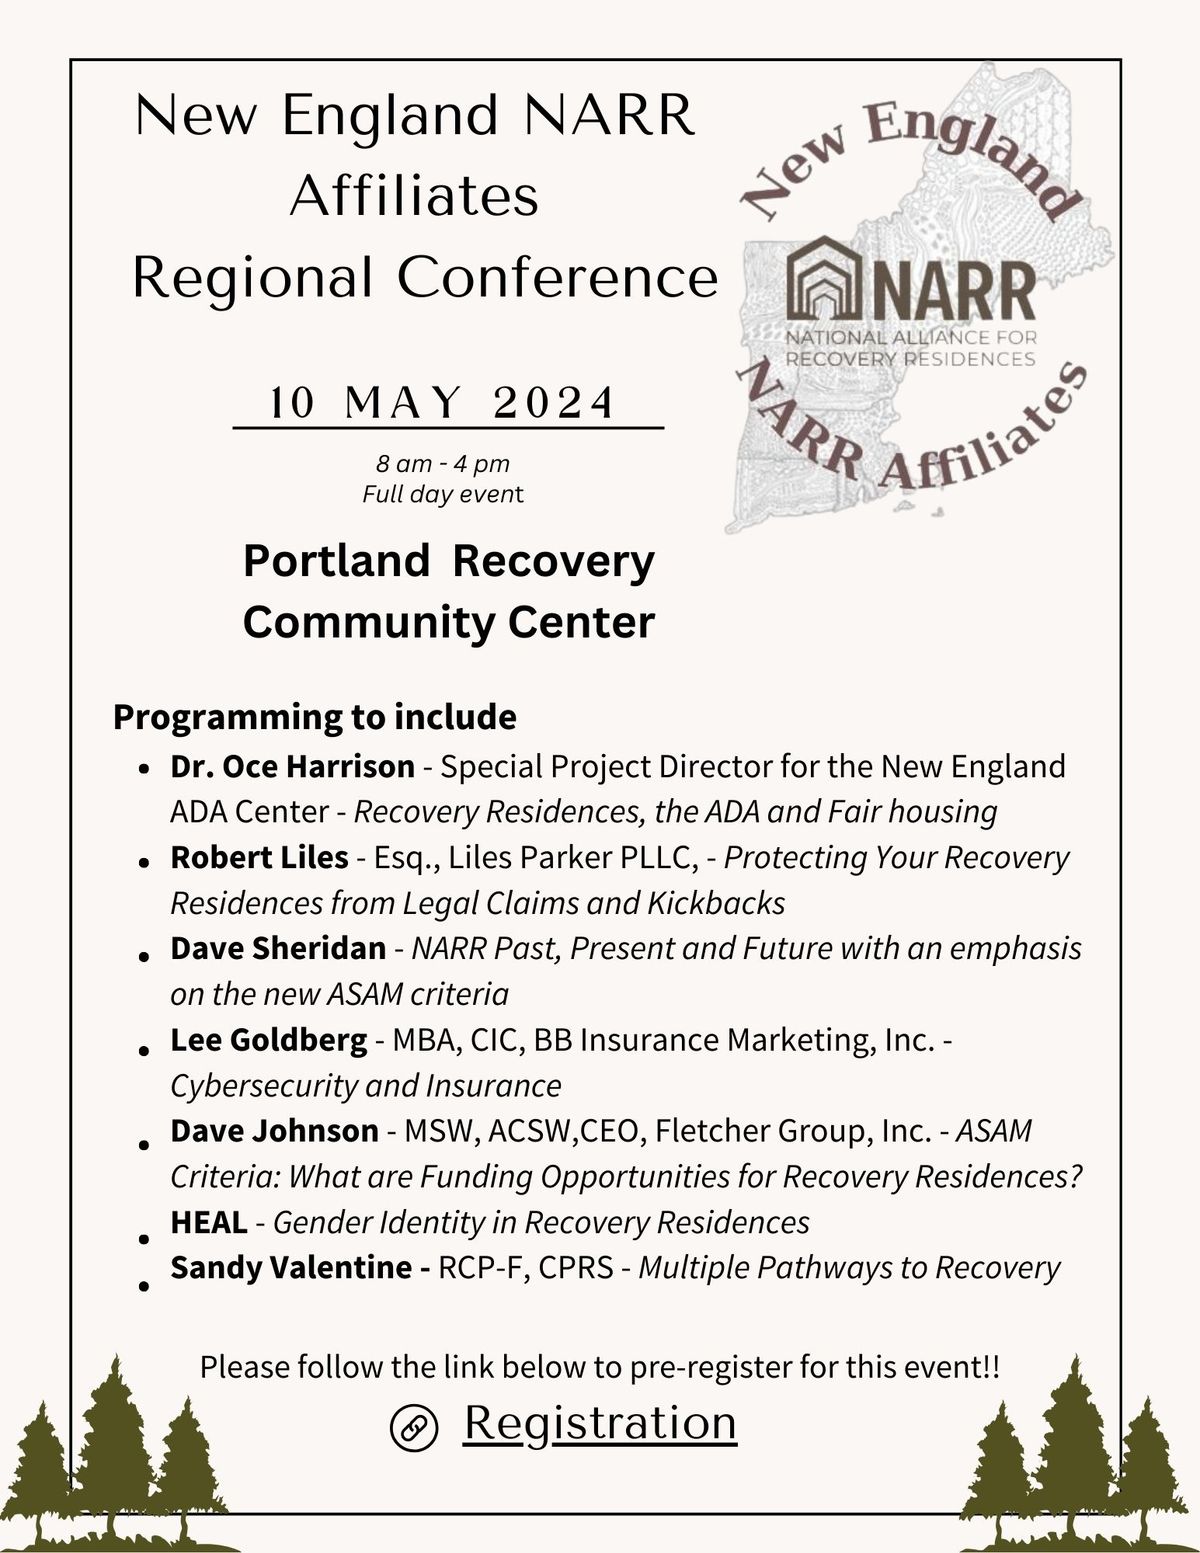 NE NARR Affiliates Regional Conference